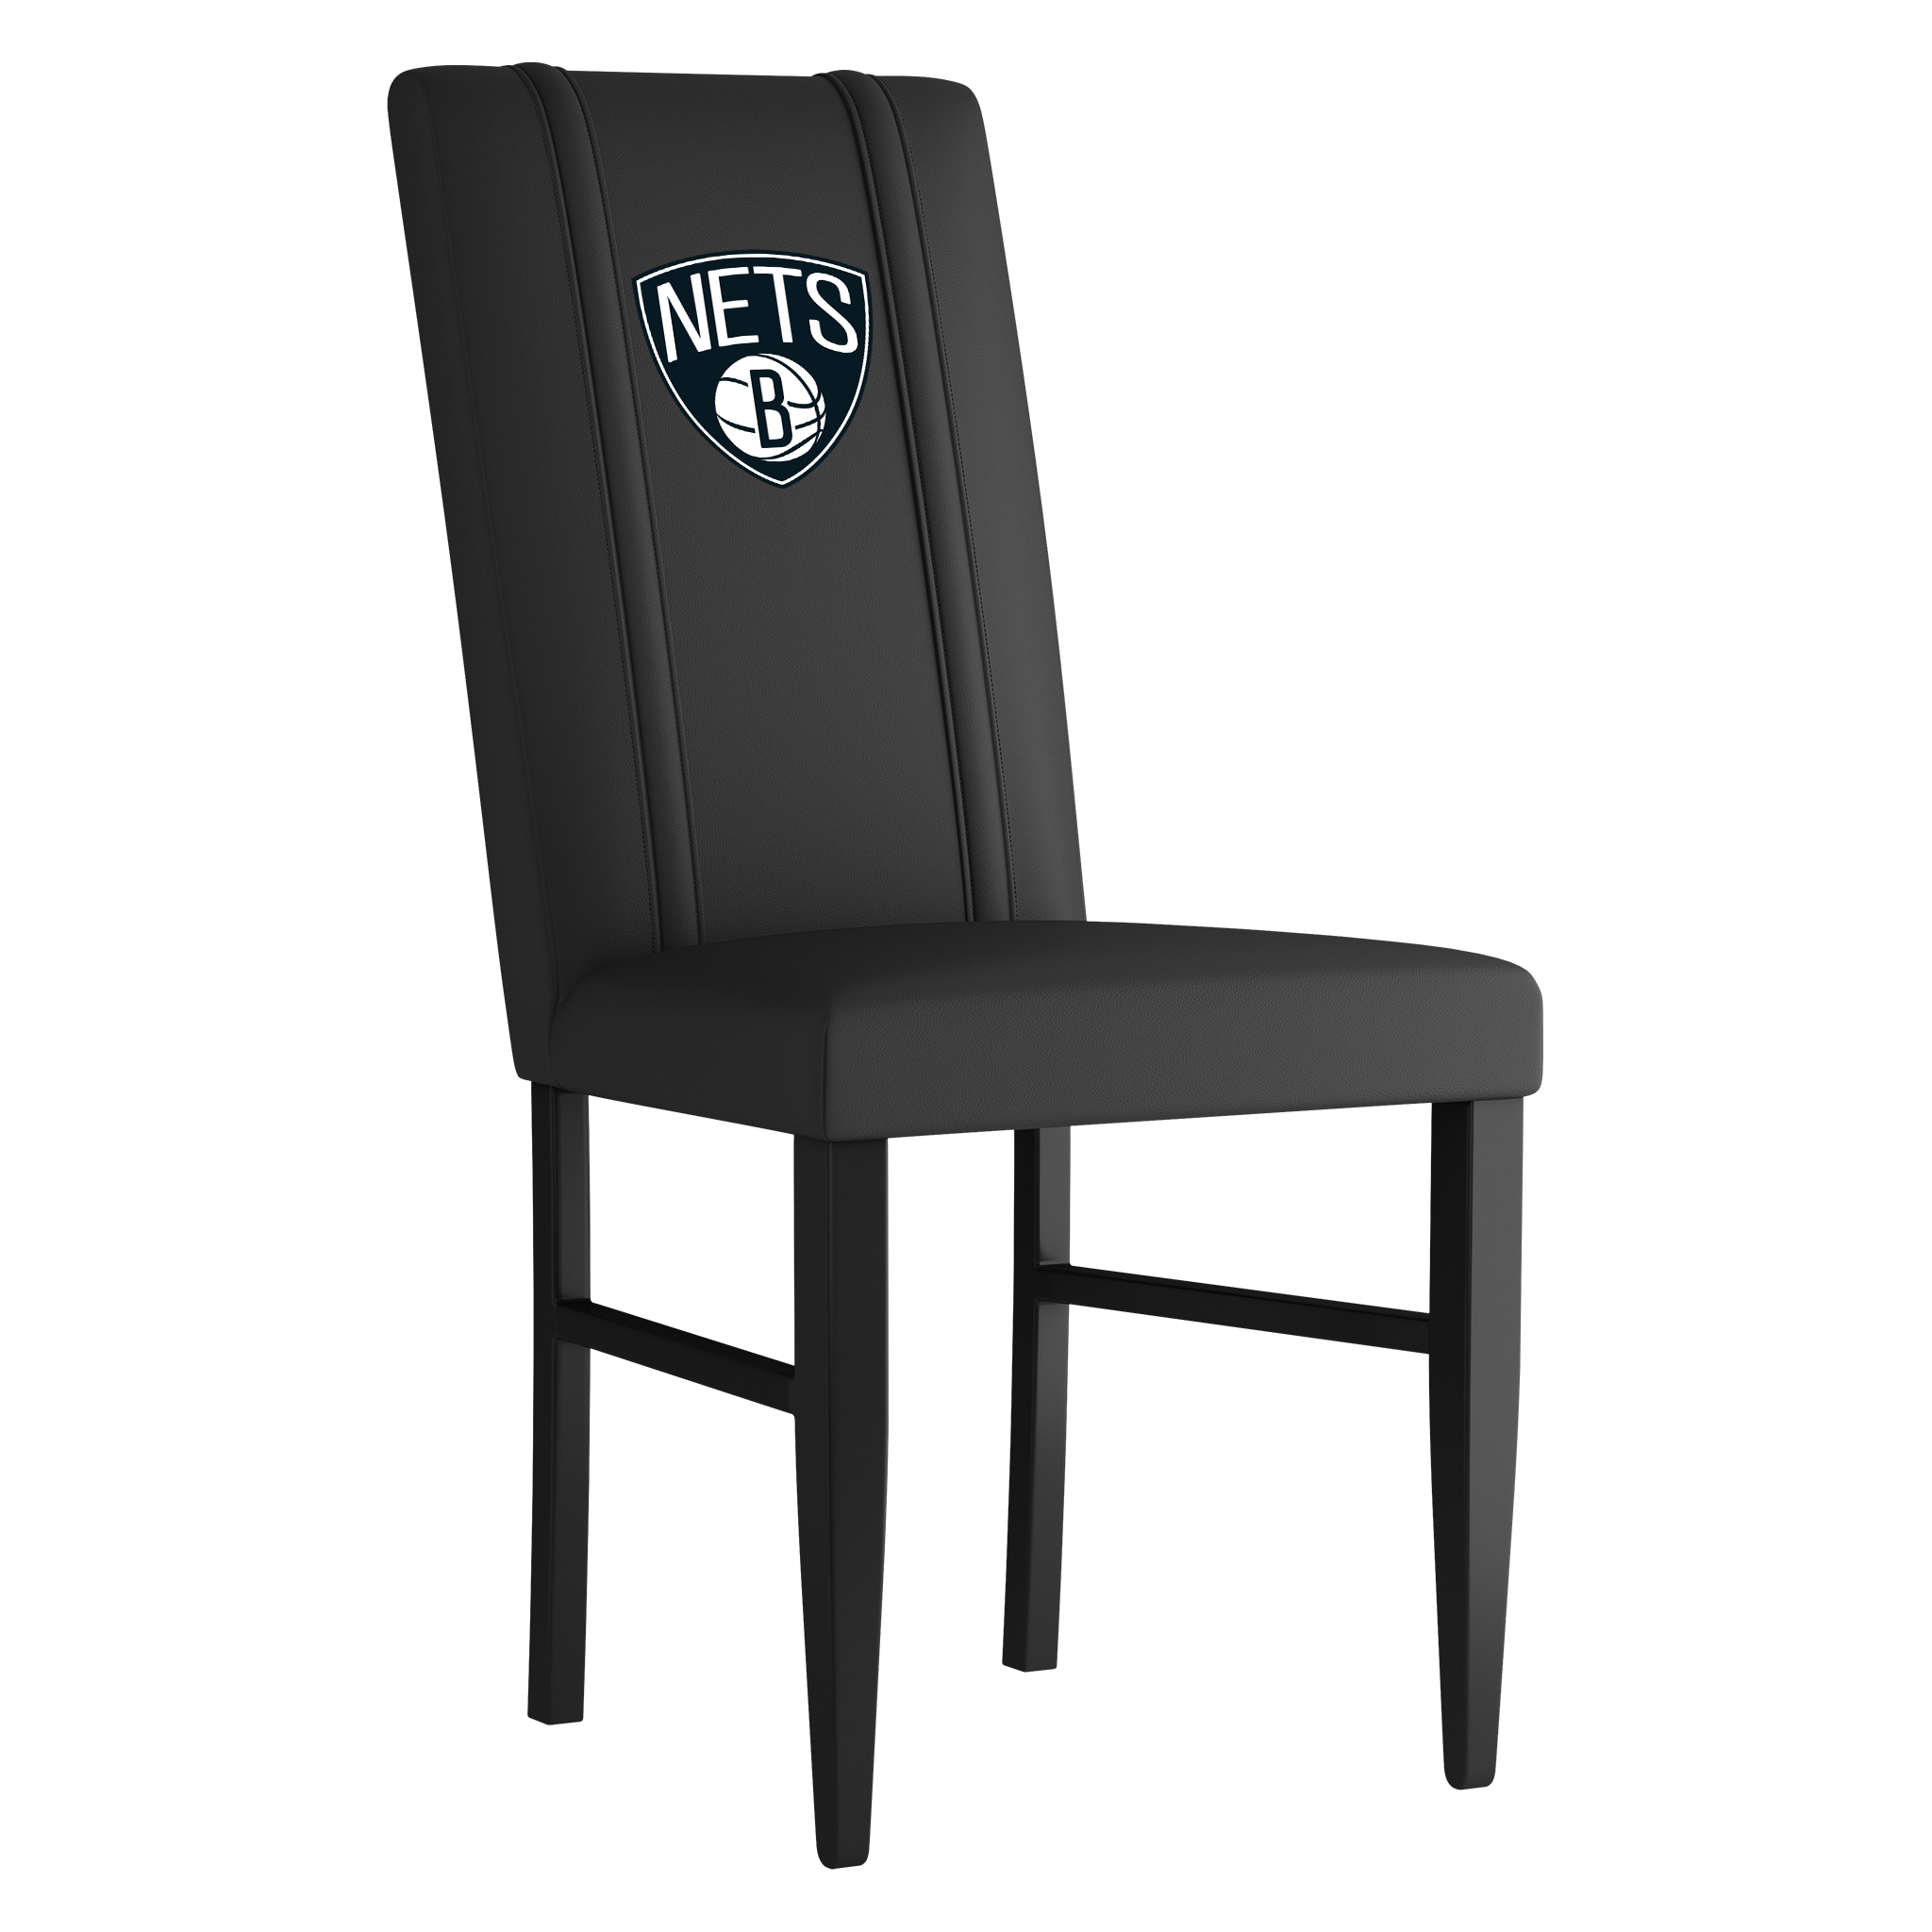 Brooklyn Nets Side Chair 2000 With Brooklyn Nets Logo 1